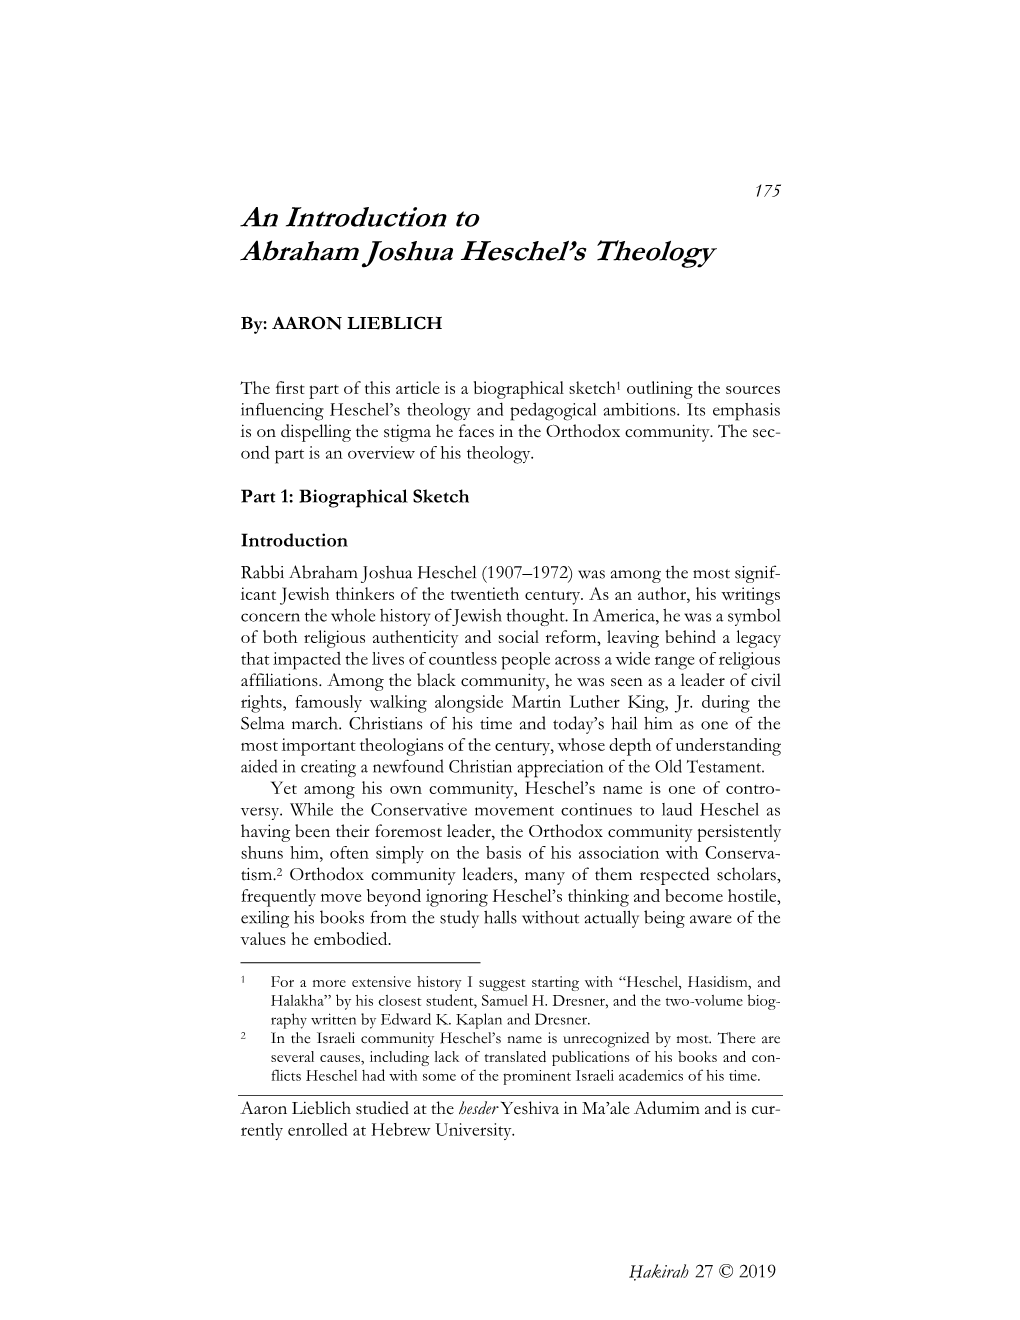 An Introduction to Abraham Joshua Heschel's Theology